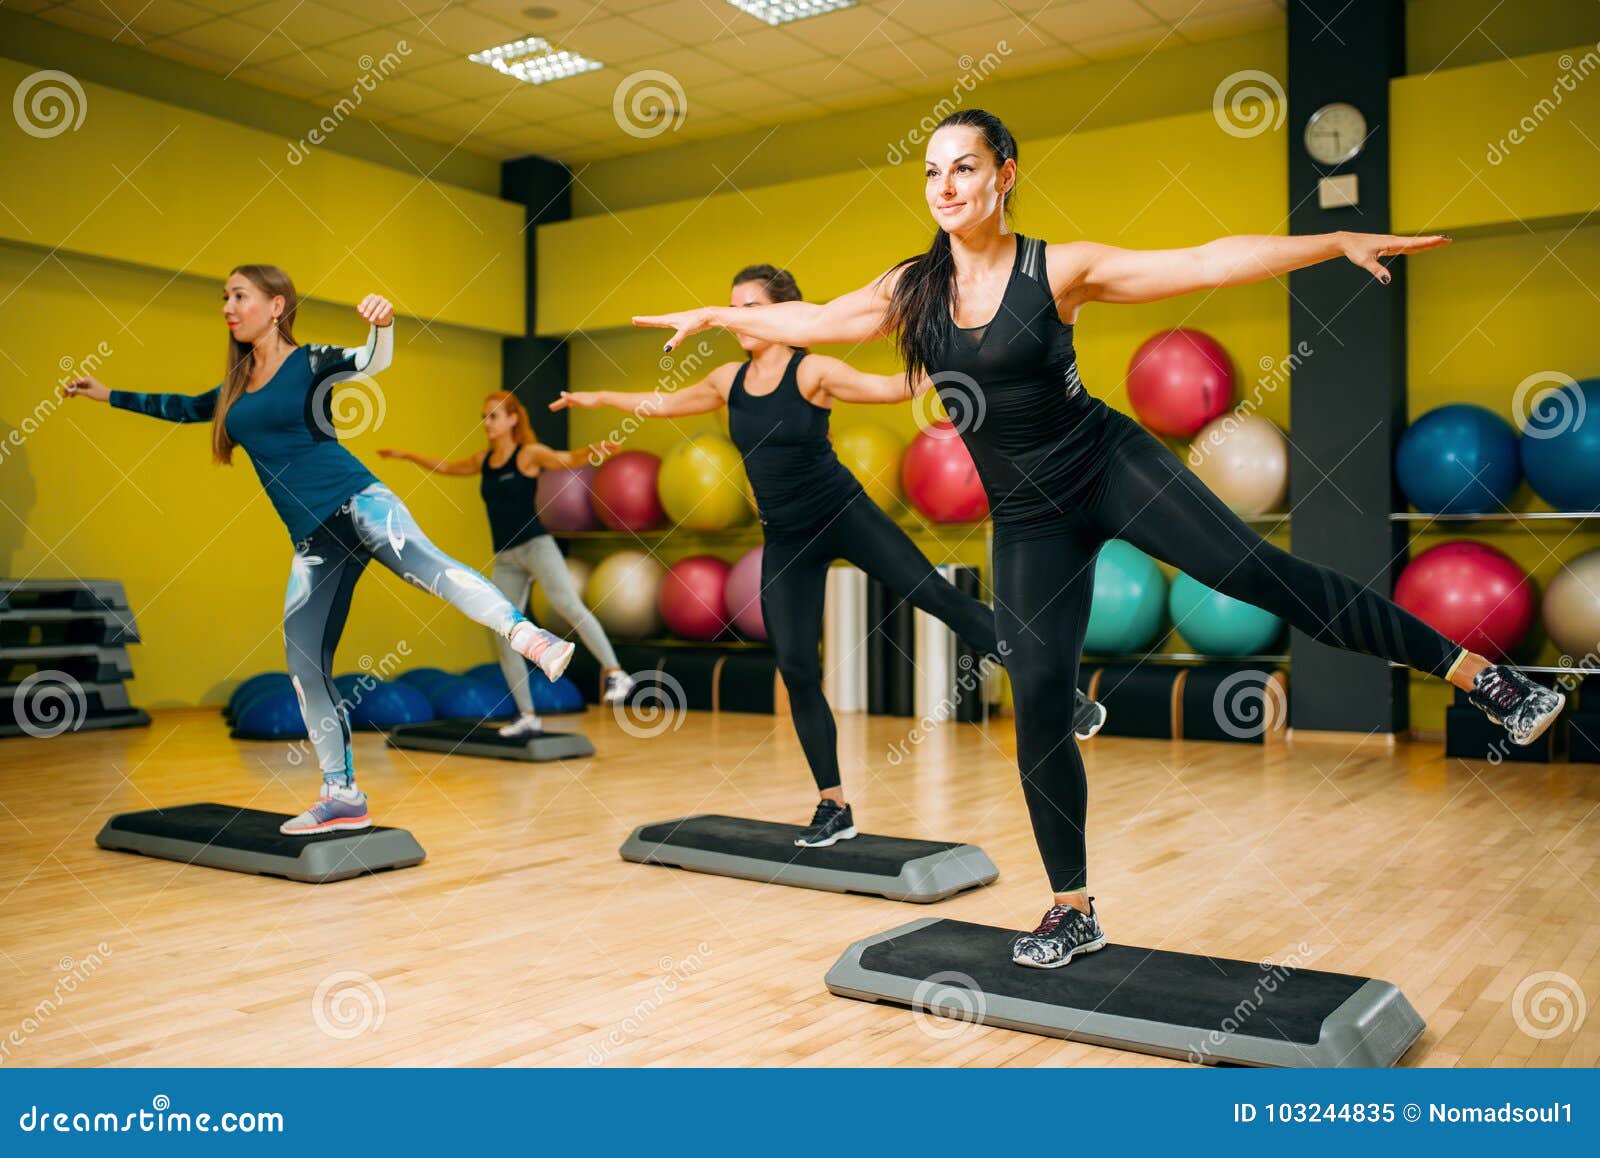 Women Group on Step Aerobic Training Stock Image - Image of coach, body:  103244835